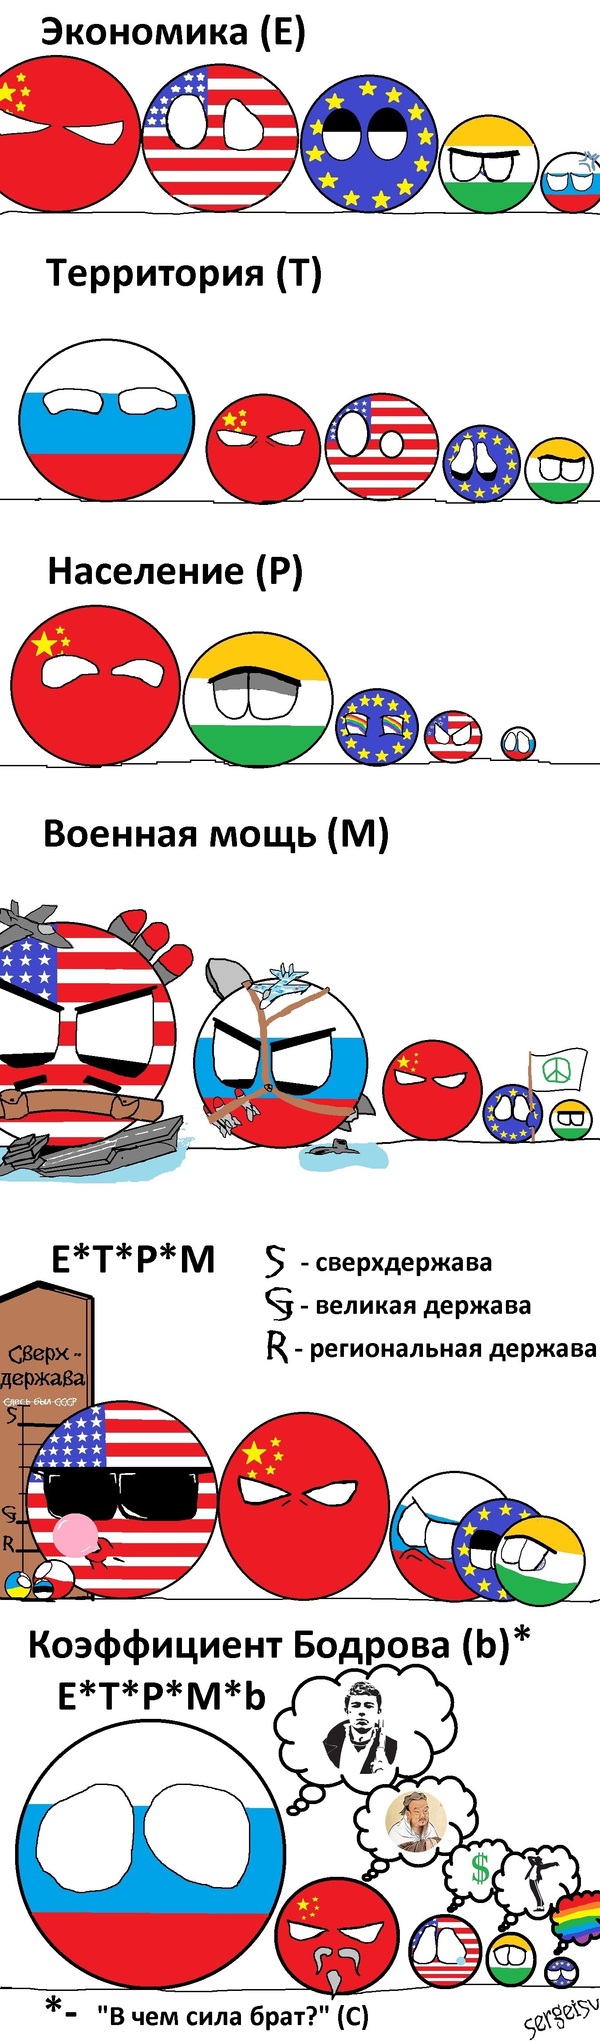 Geopolitics - My, Countryballs, Russia, Sergey Bodrov, The United States and the European Union, Cold war, Politics, China, USA